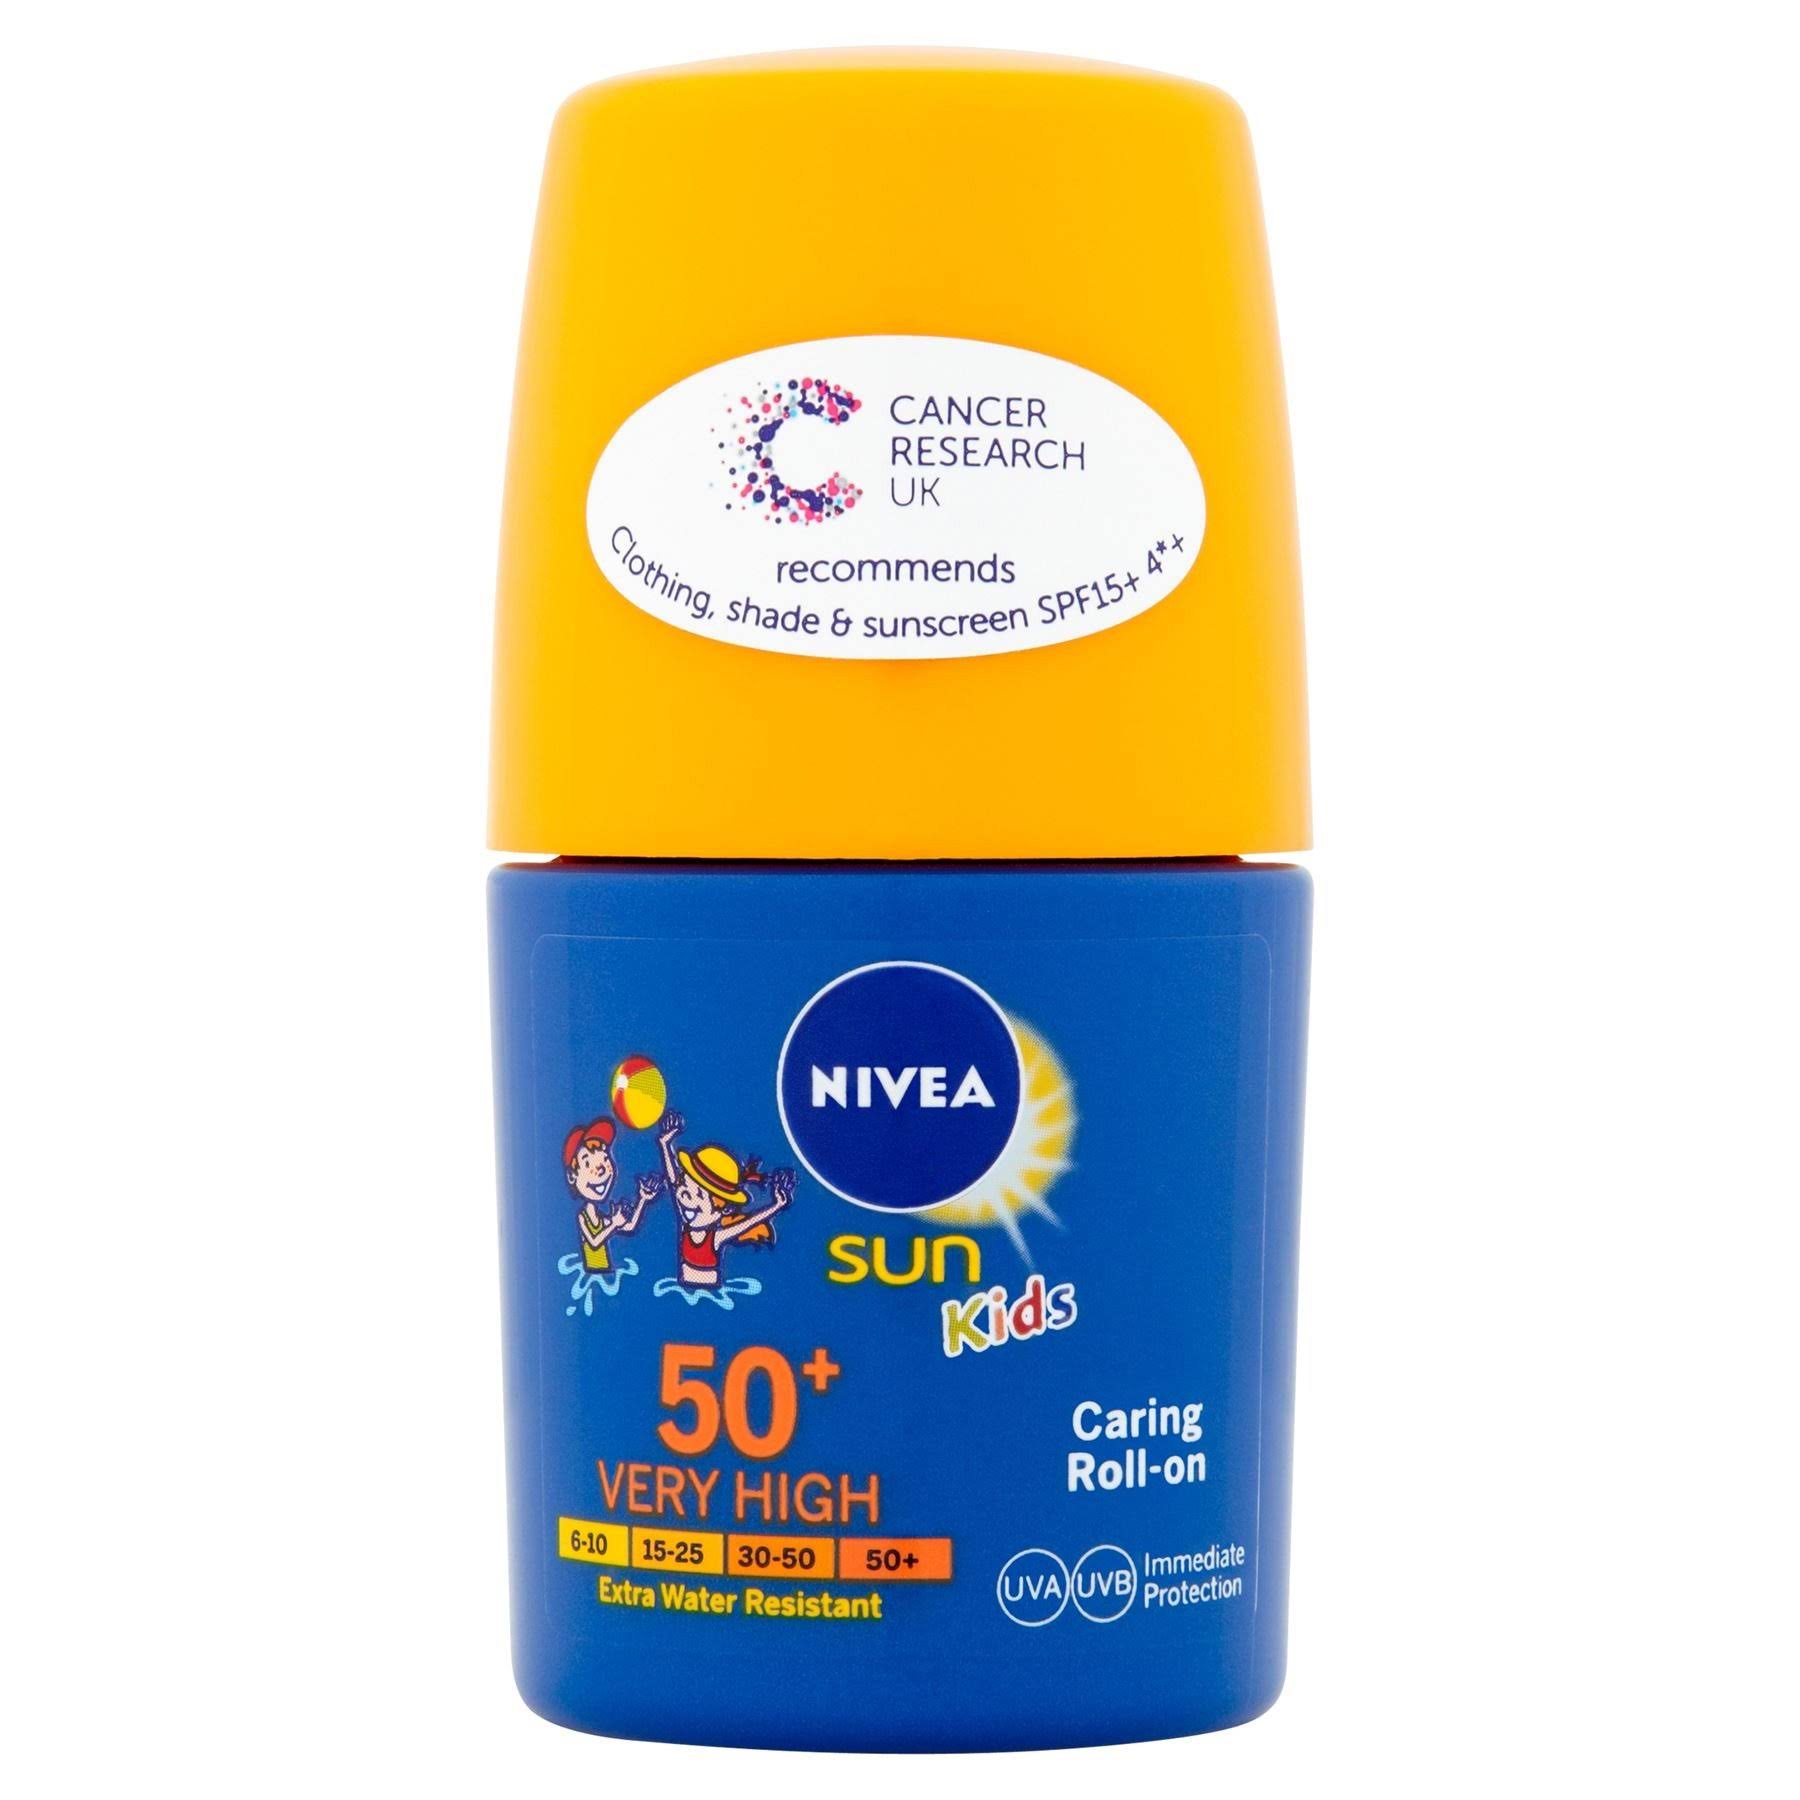 Nivea Sun Kids Caring Roll-On - SPF 50+, 50ml